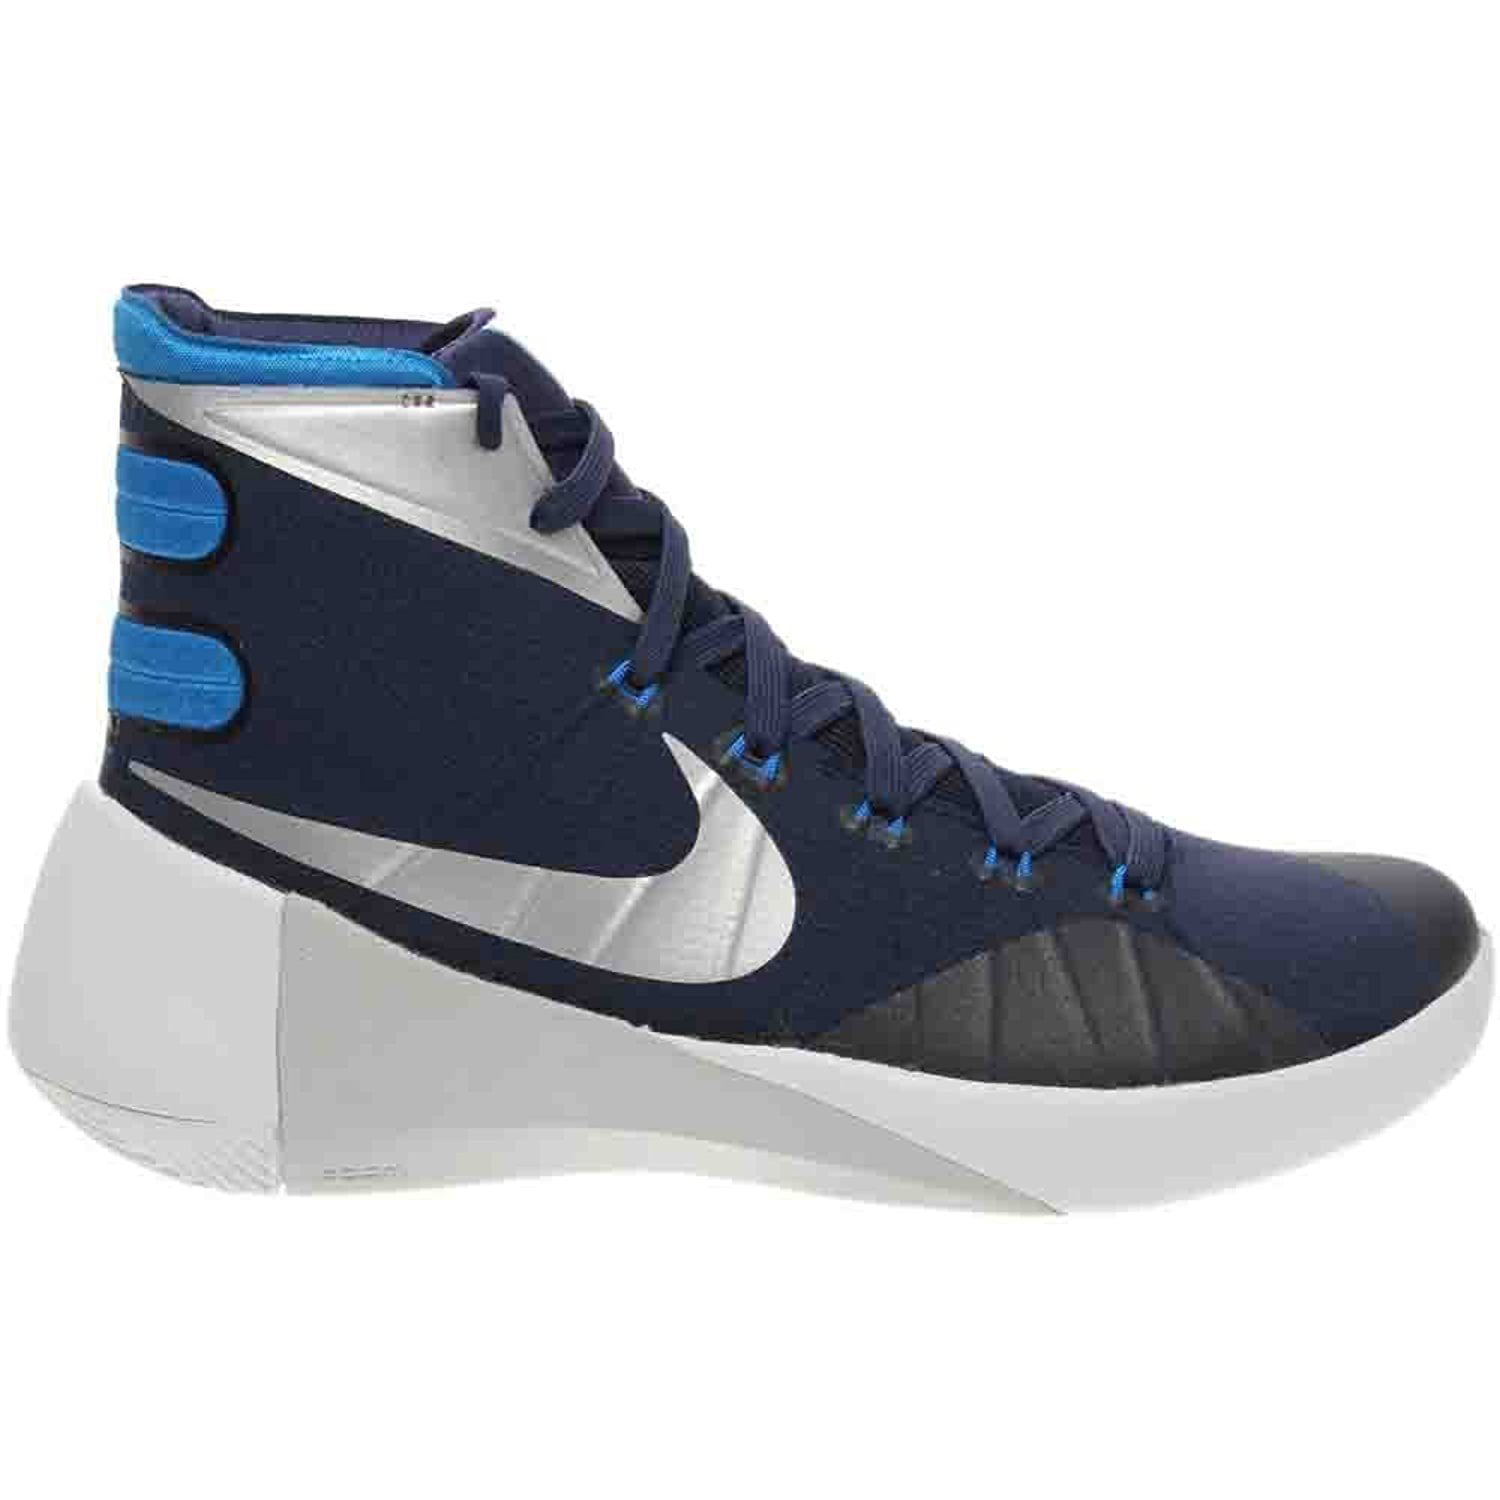 nike mens 2015 tb basketball navy/photo blue/white 749645-405 size 11.5 - Walmart.com